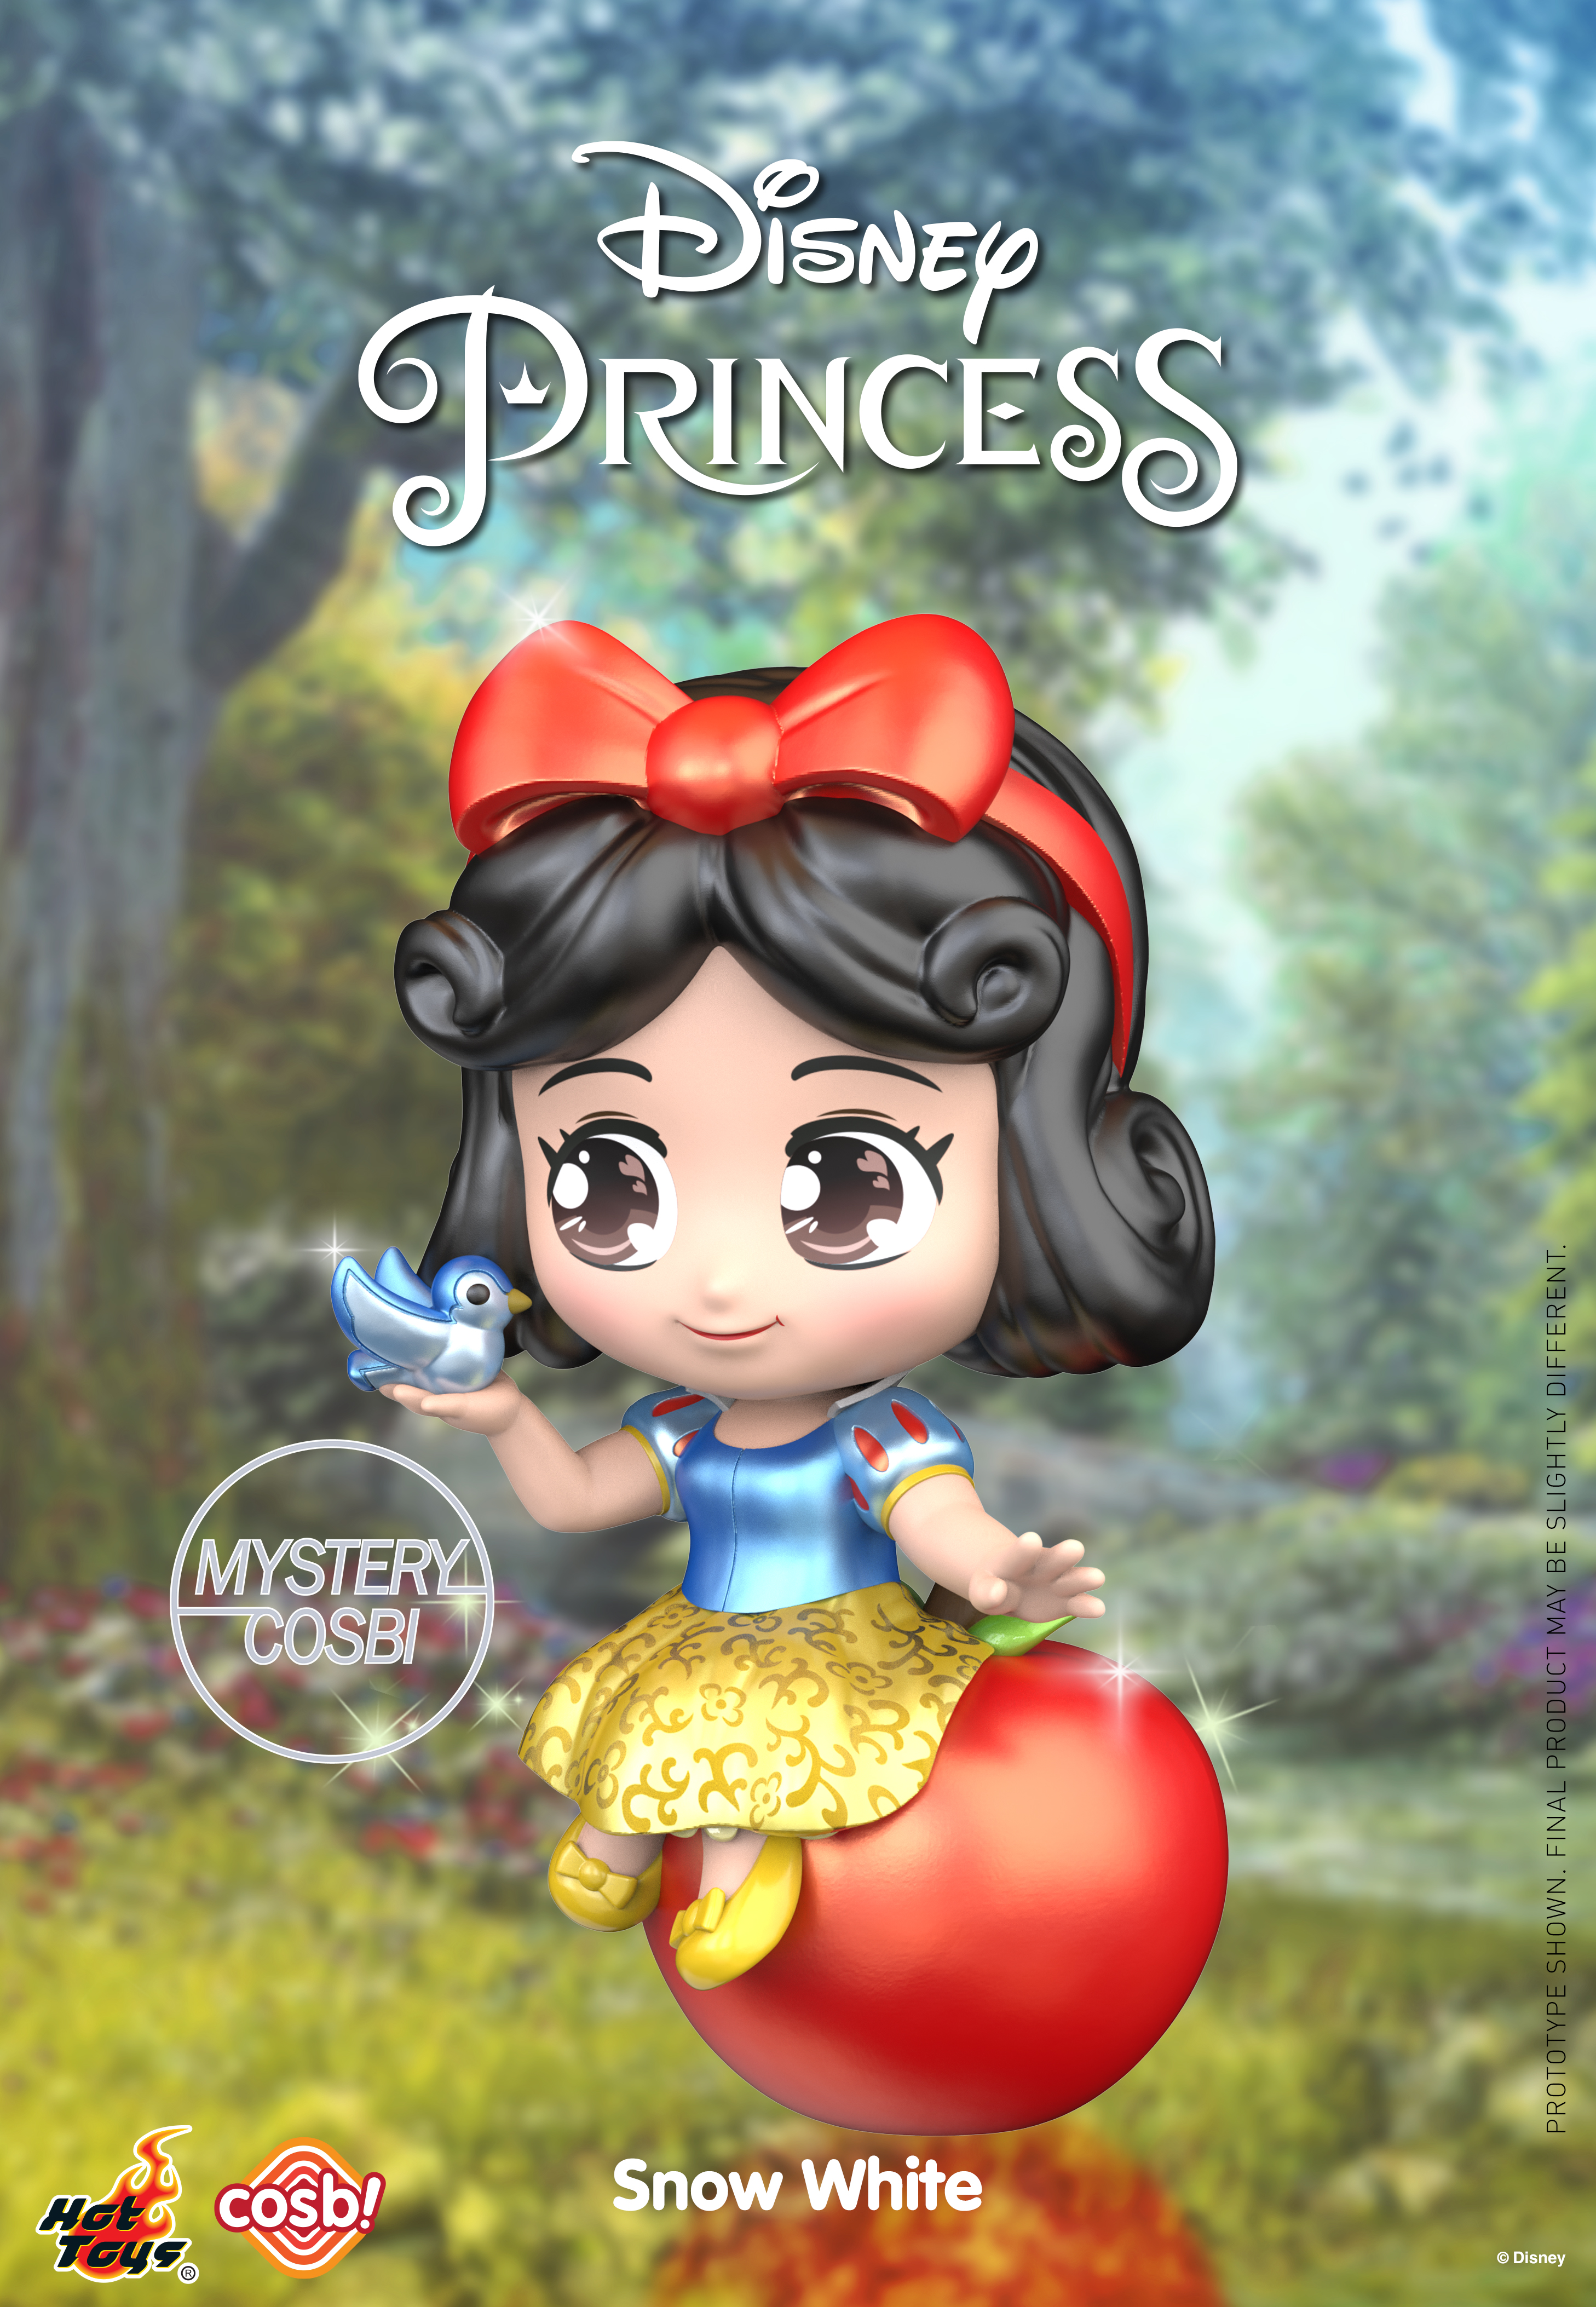 Hot Toys - Disney Princess Cosbi_PR20